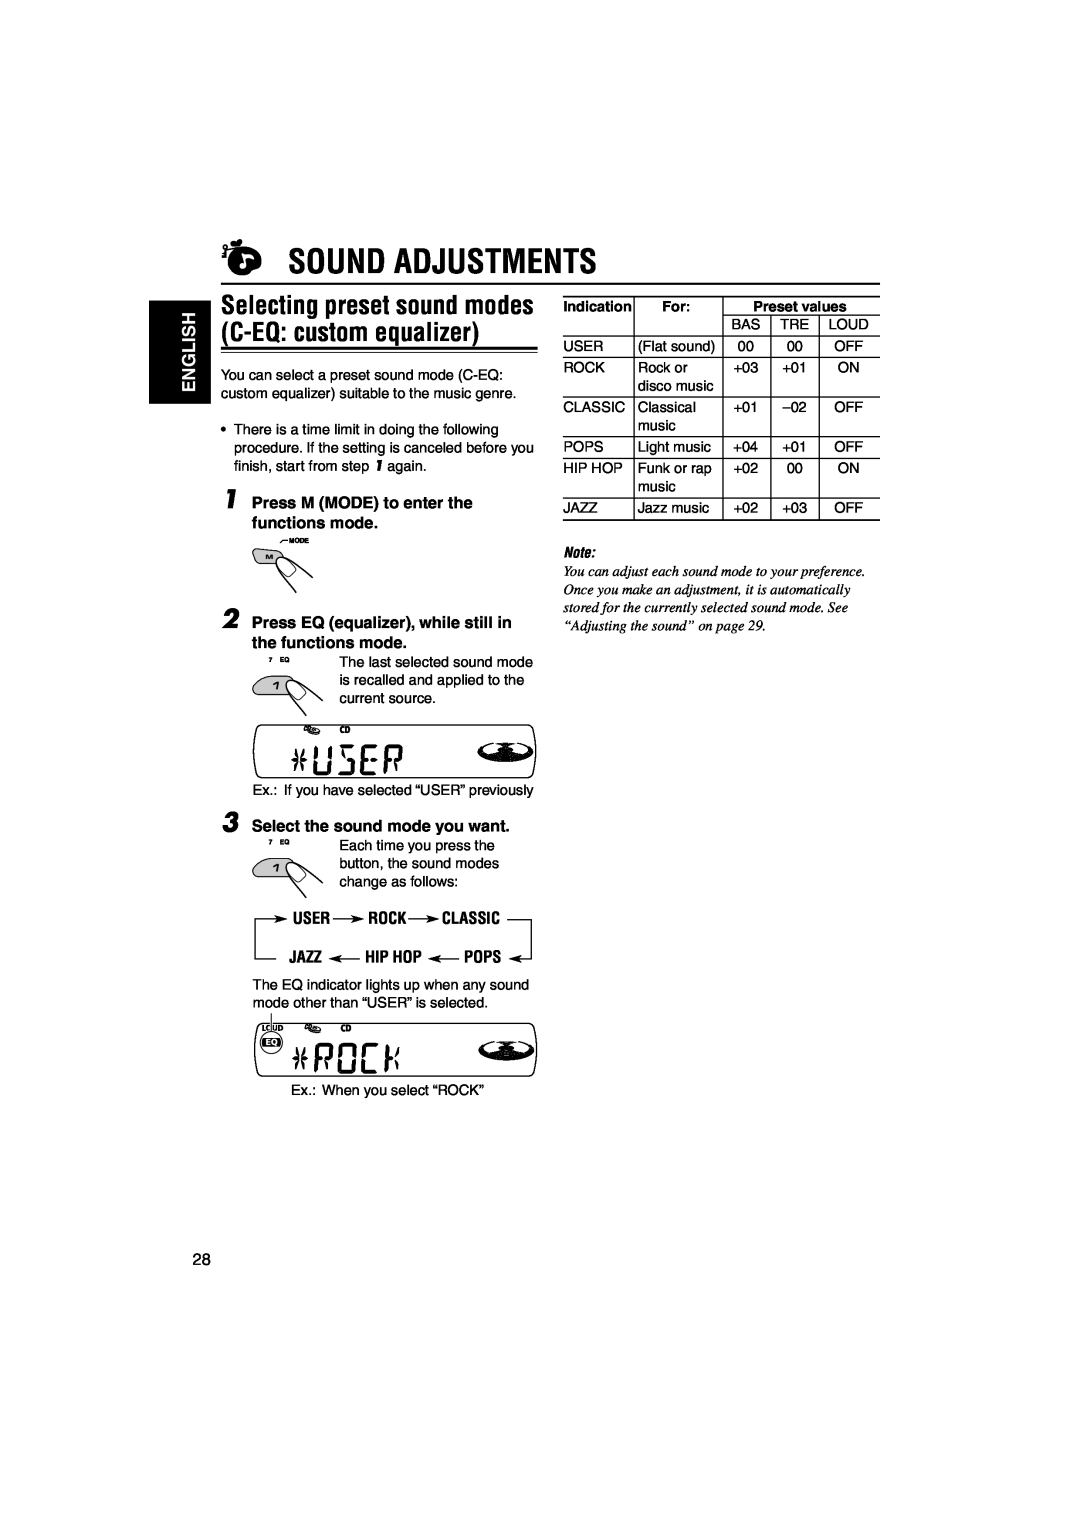 JVC KD-S891R manual Sound Adjustments, Selecting preset sound modes C-EQ custom equalizer, English, Preset values 